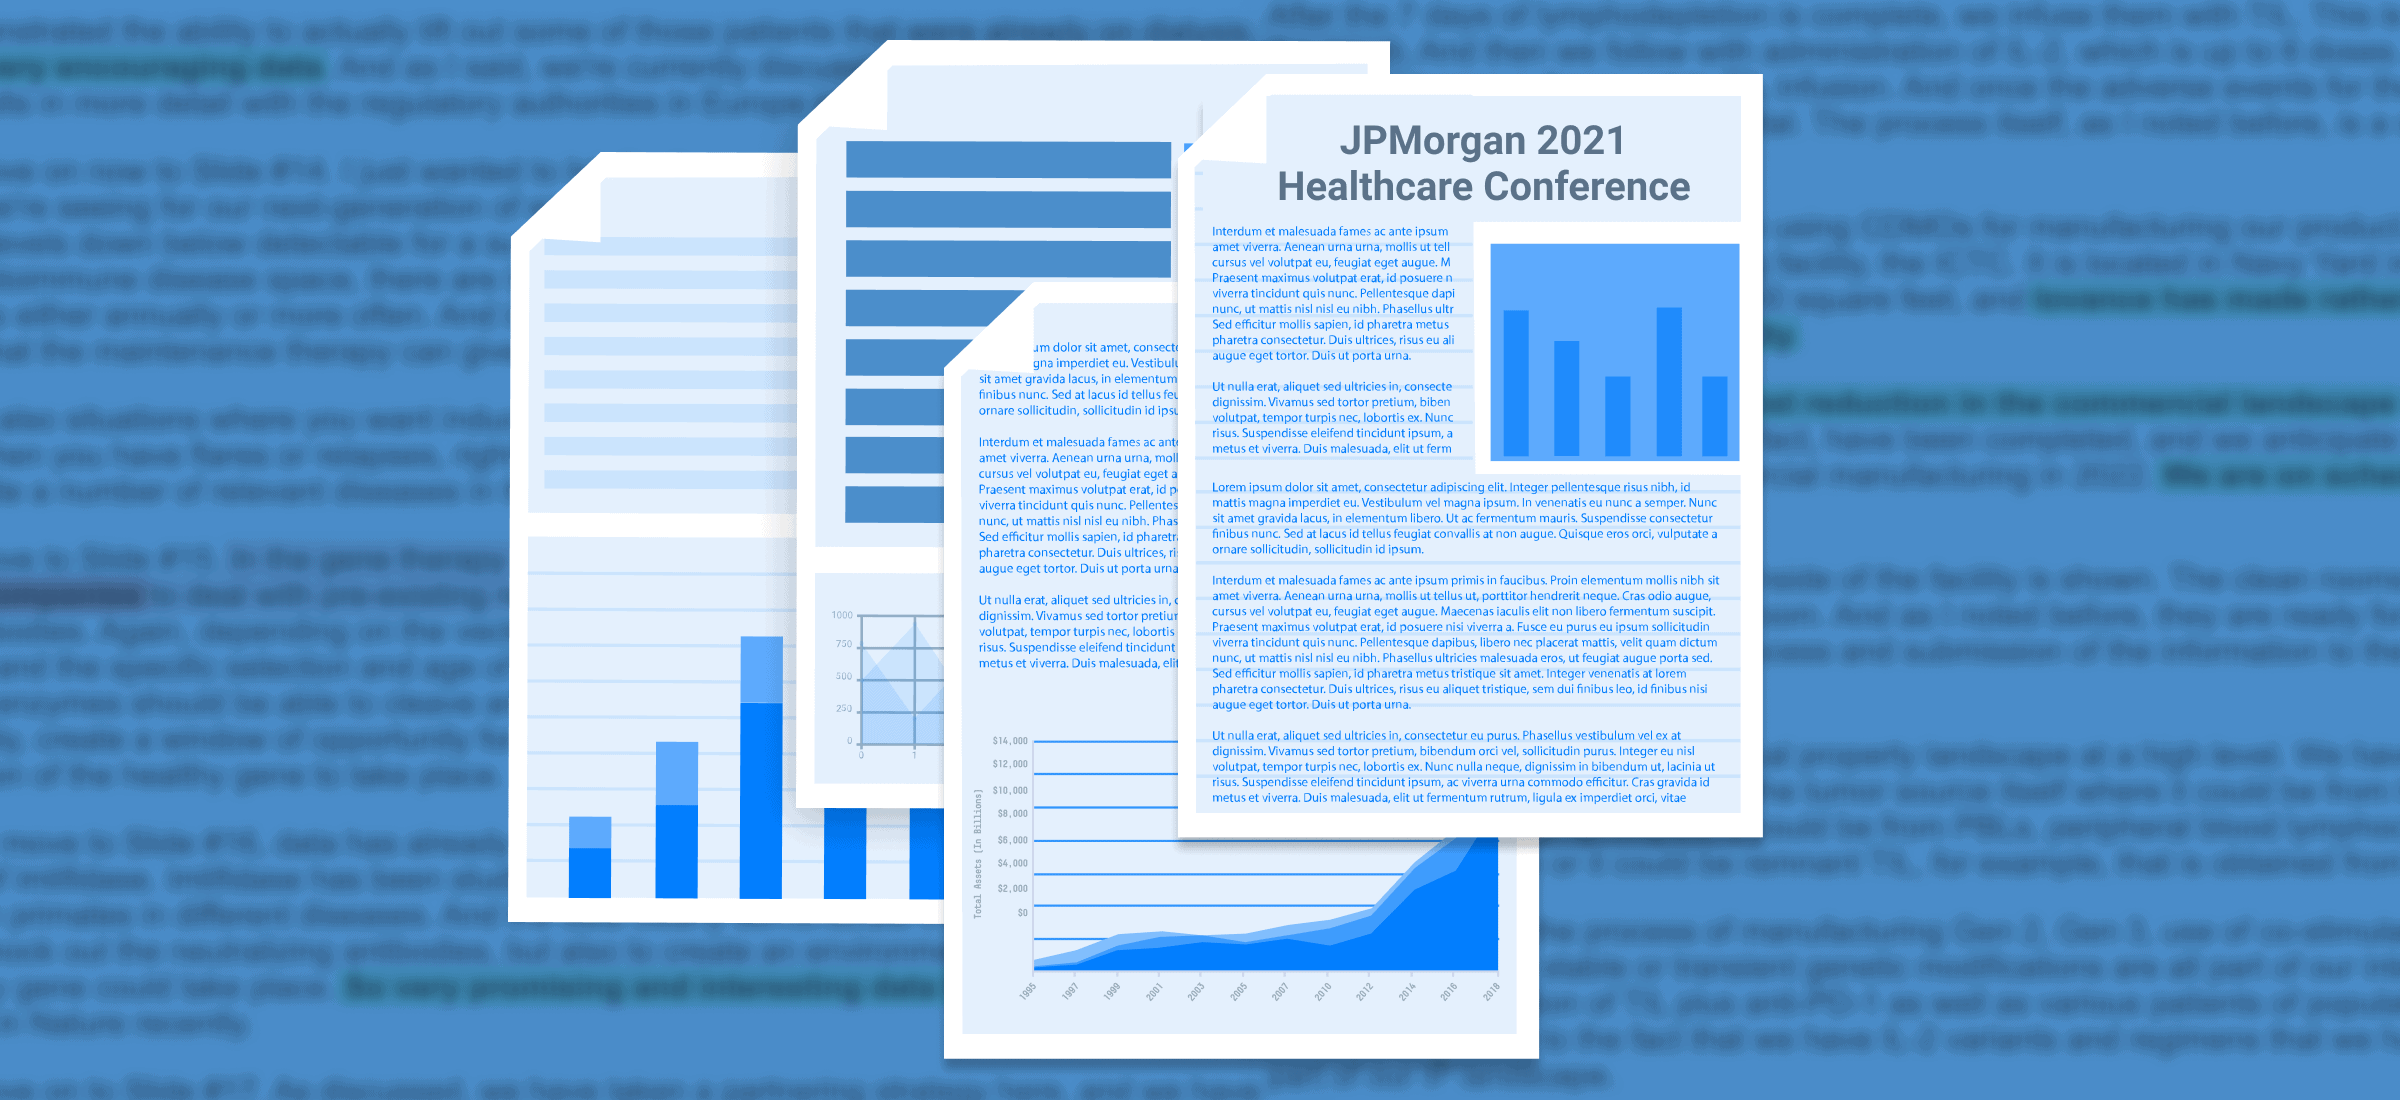 JP Morgan Healthcare conference paper illustration.